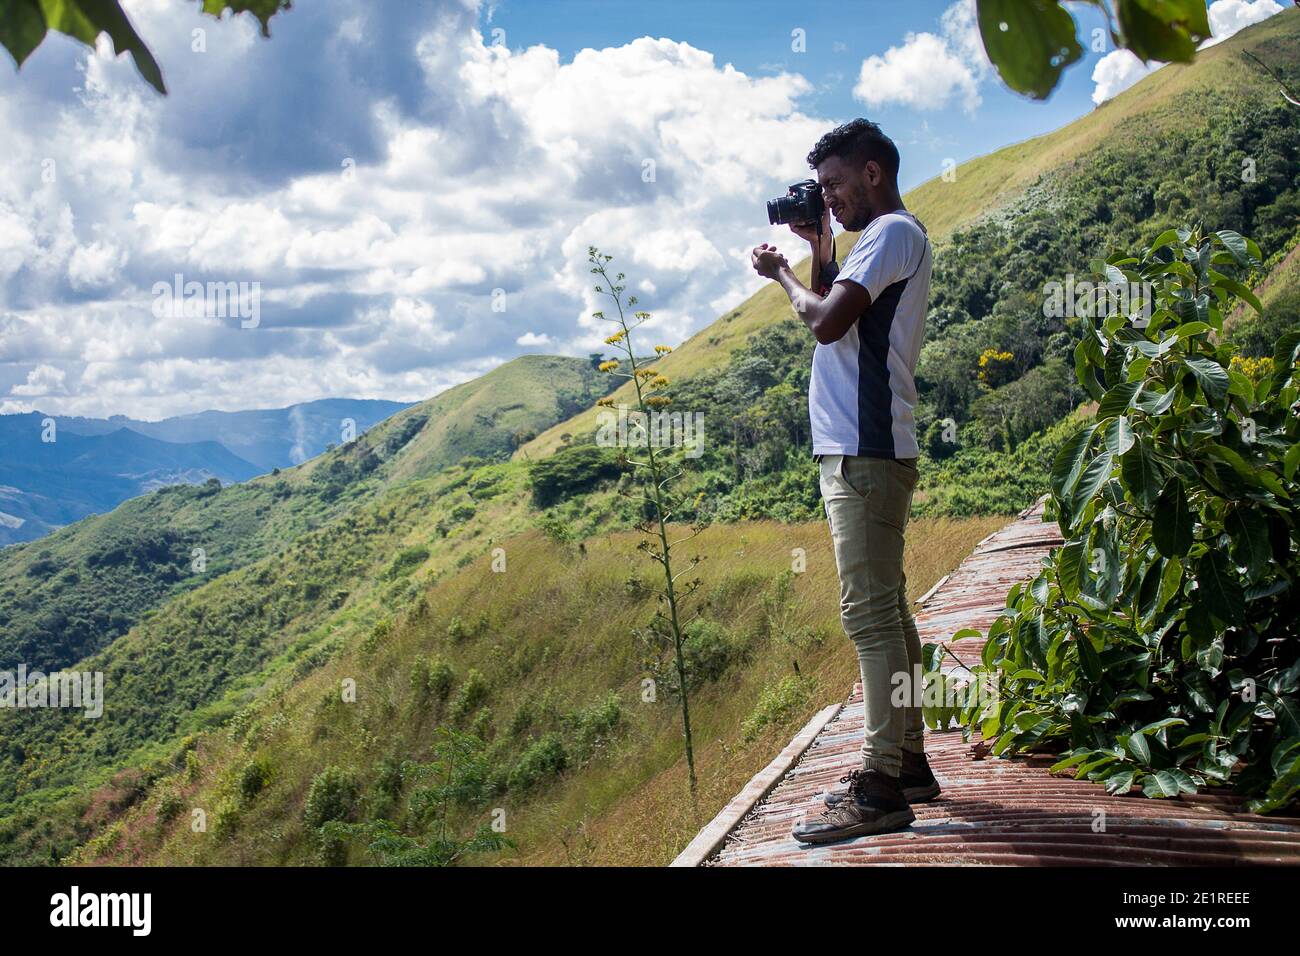 A man with a camera on his trip through the mountains of Miranda in Venezuela Stock Photo